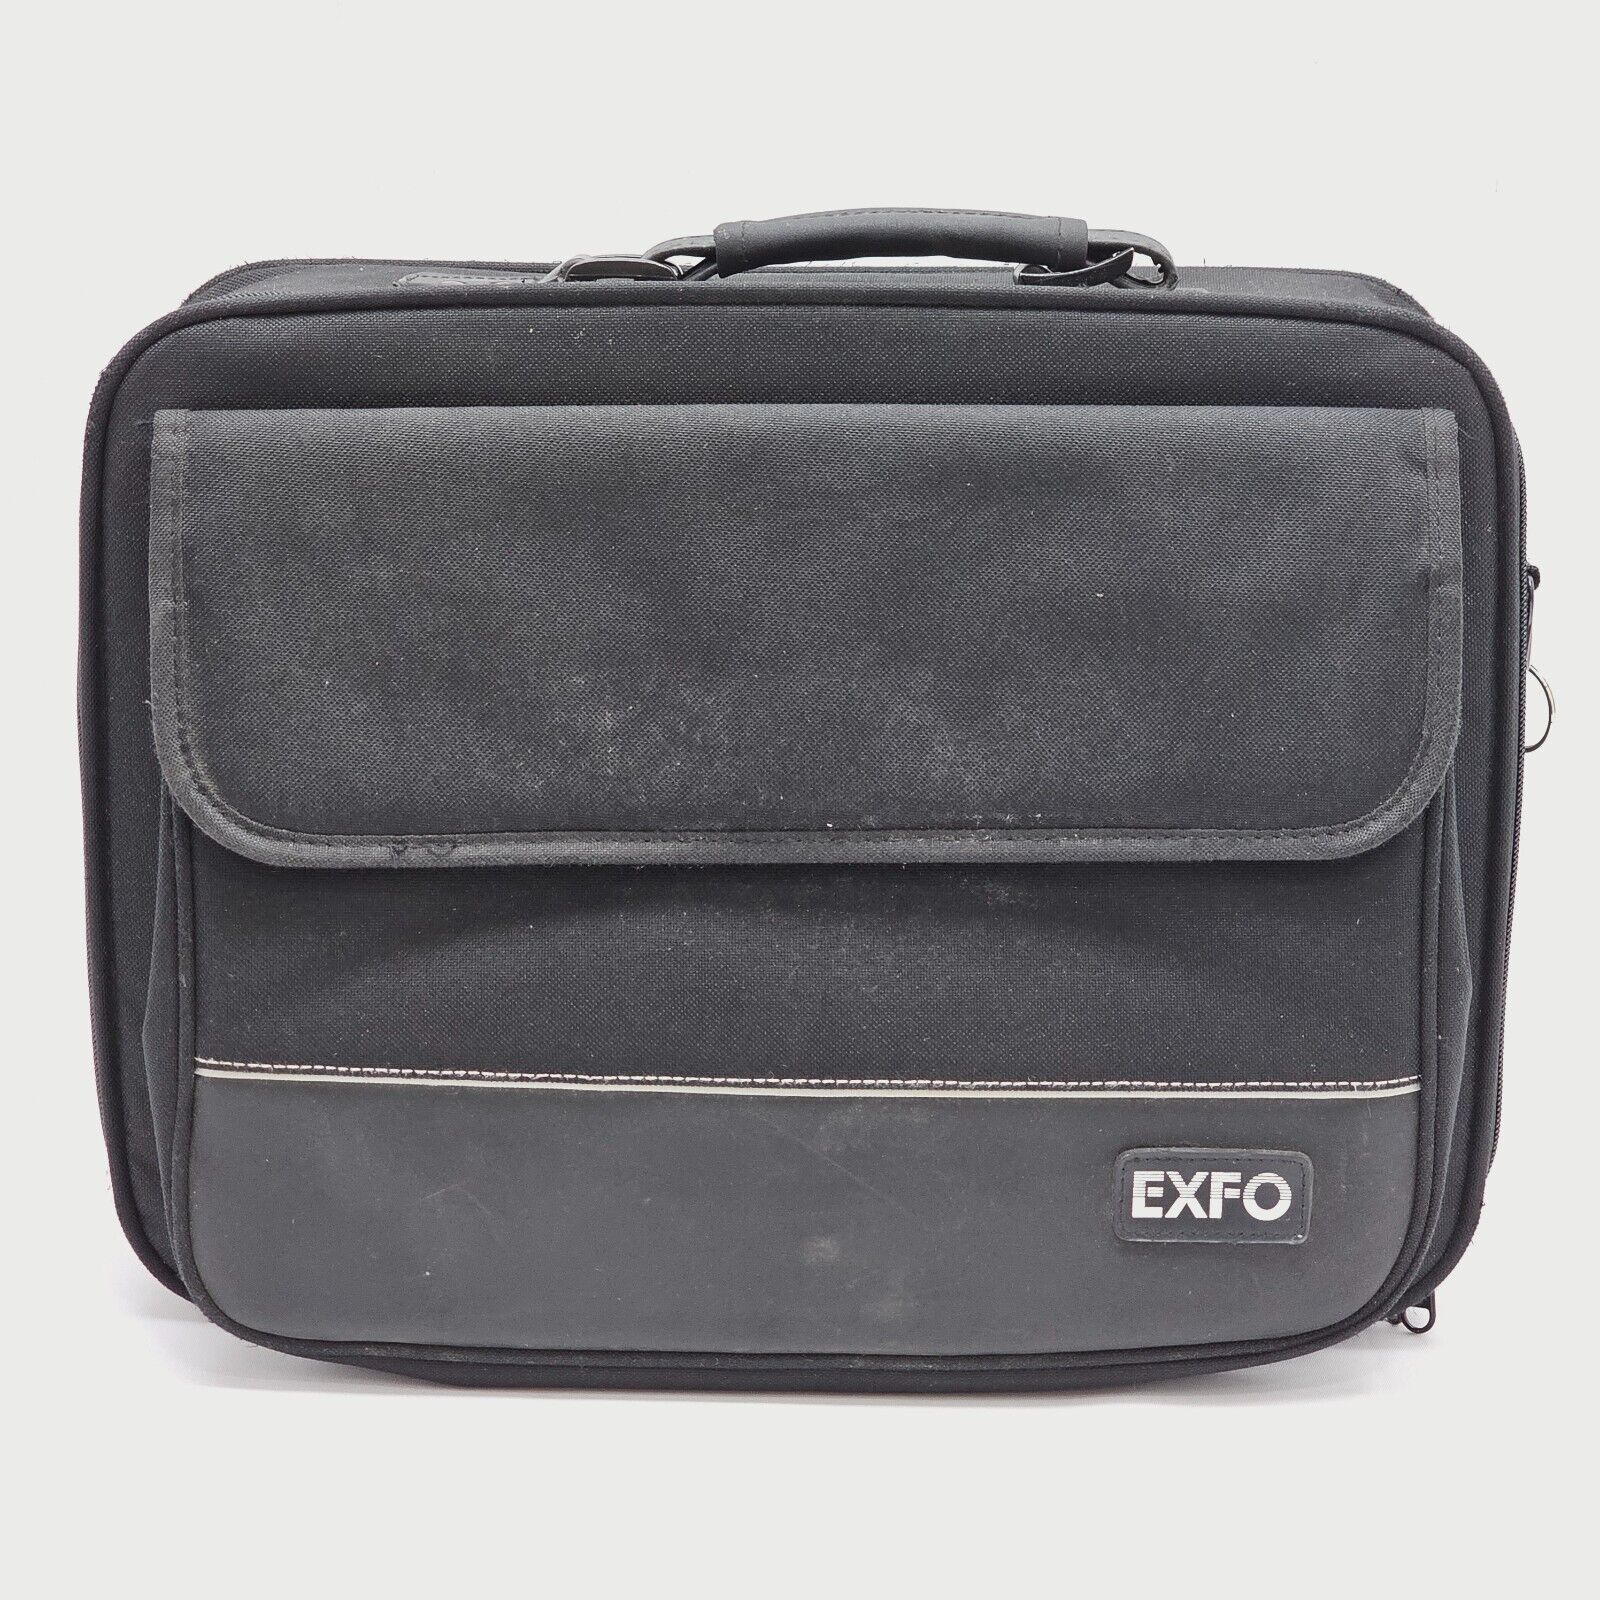 EXFO Carry Bag for FTB-200/150 FTB-1 FTB-1 Pro FTB-1 v2